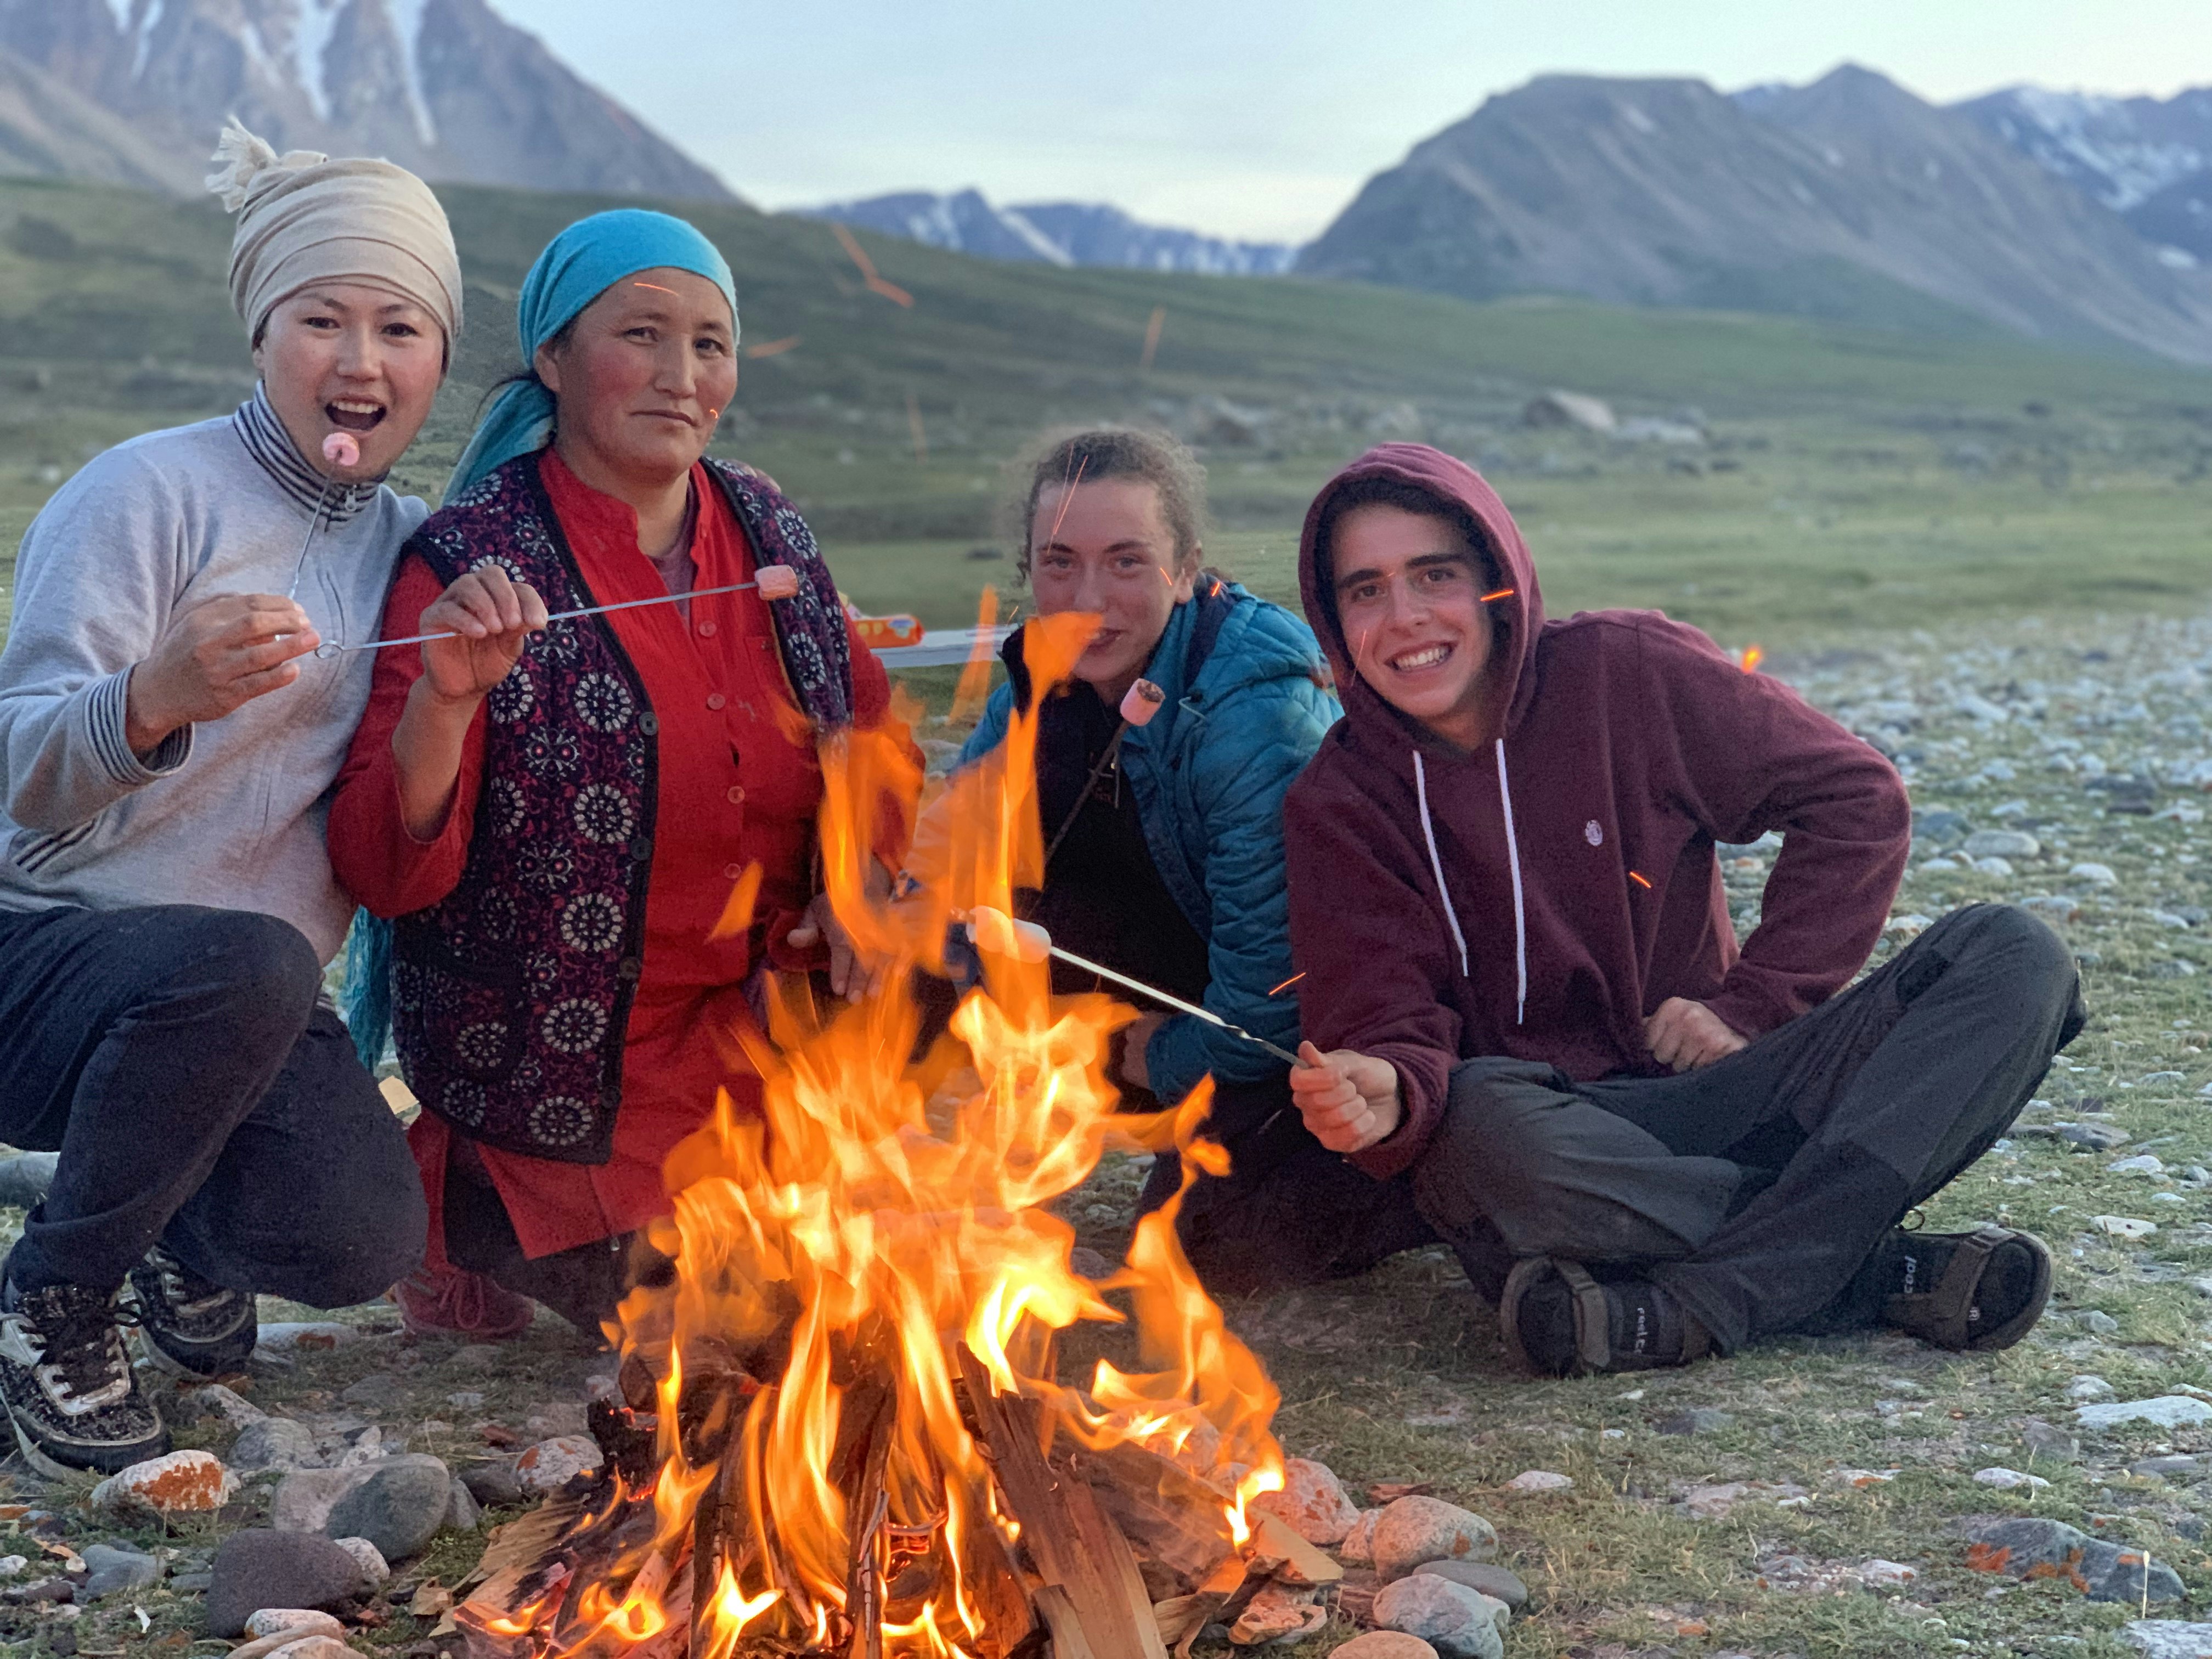 Authentic Travel: Tour Mongolia As a Nomad